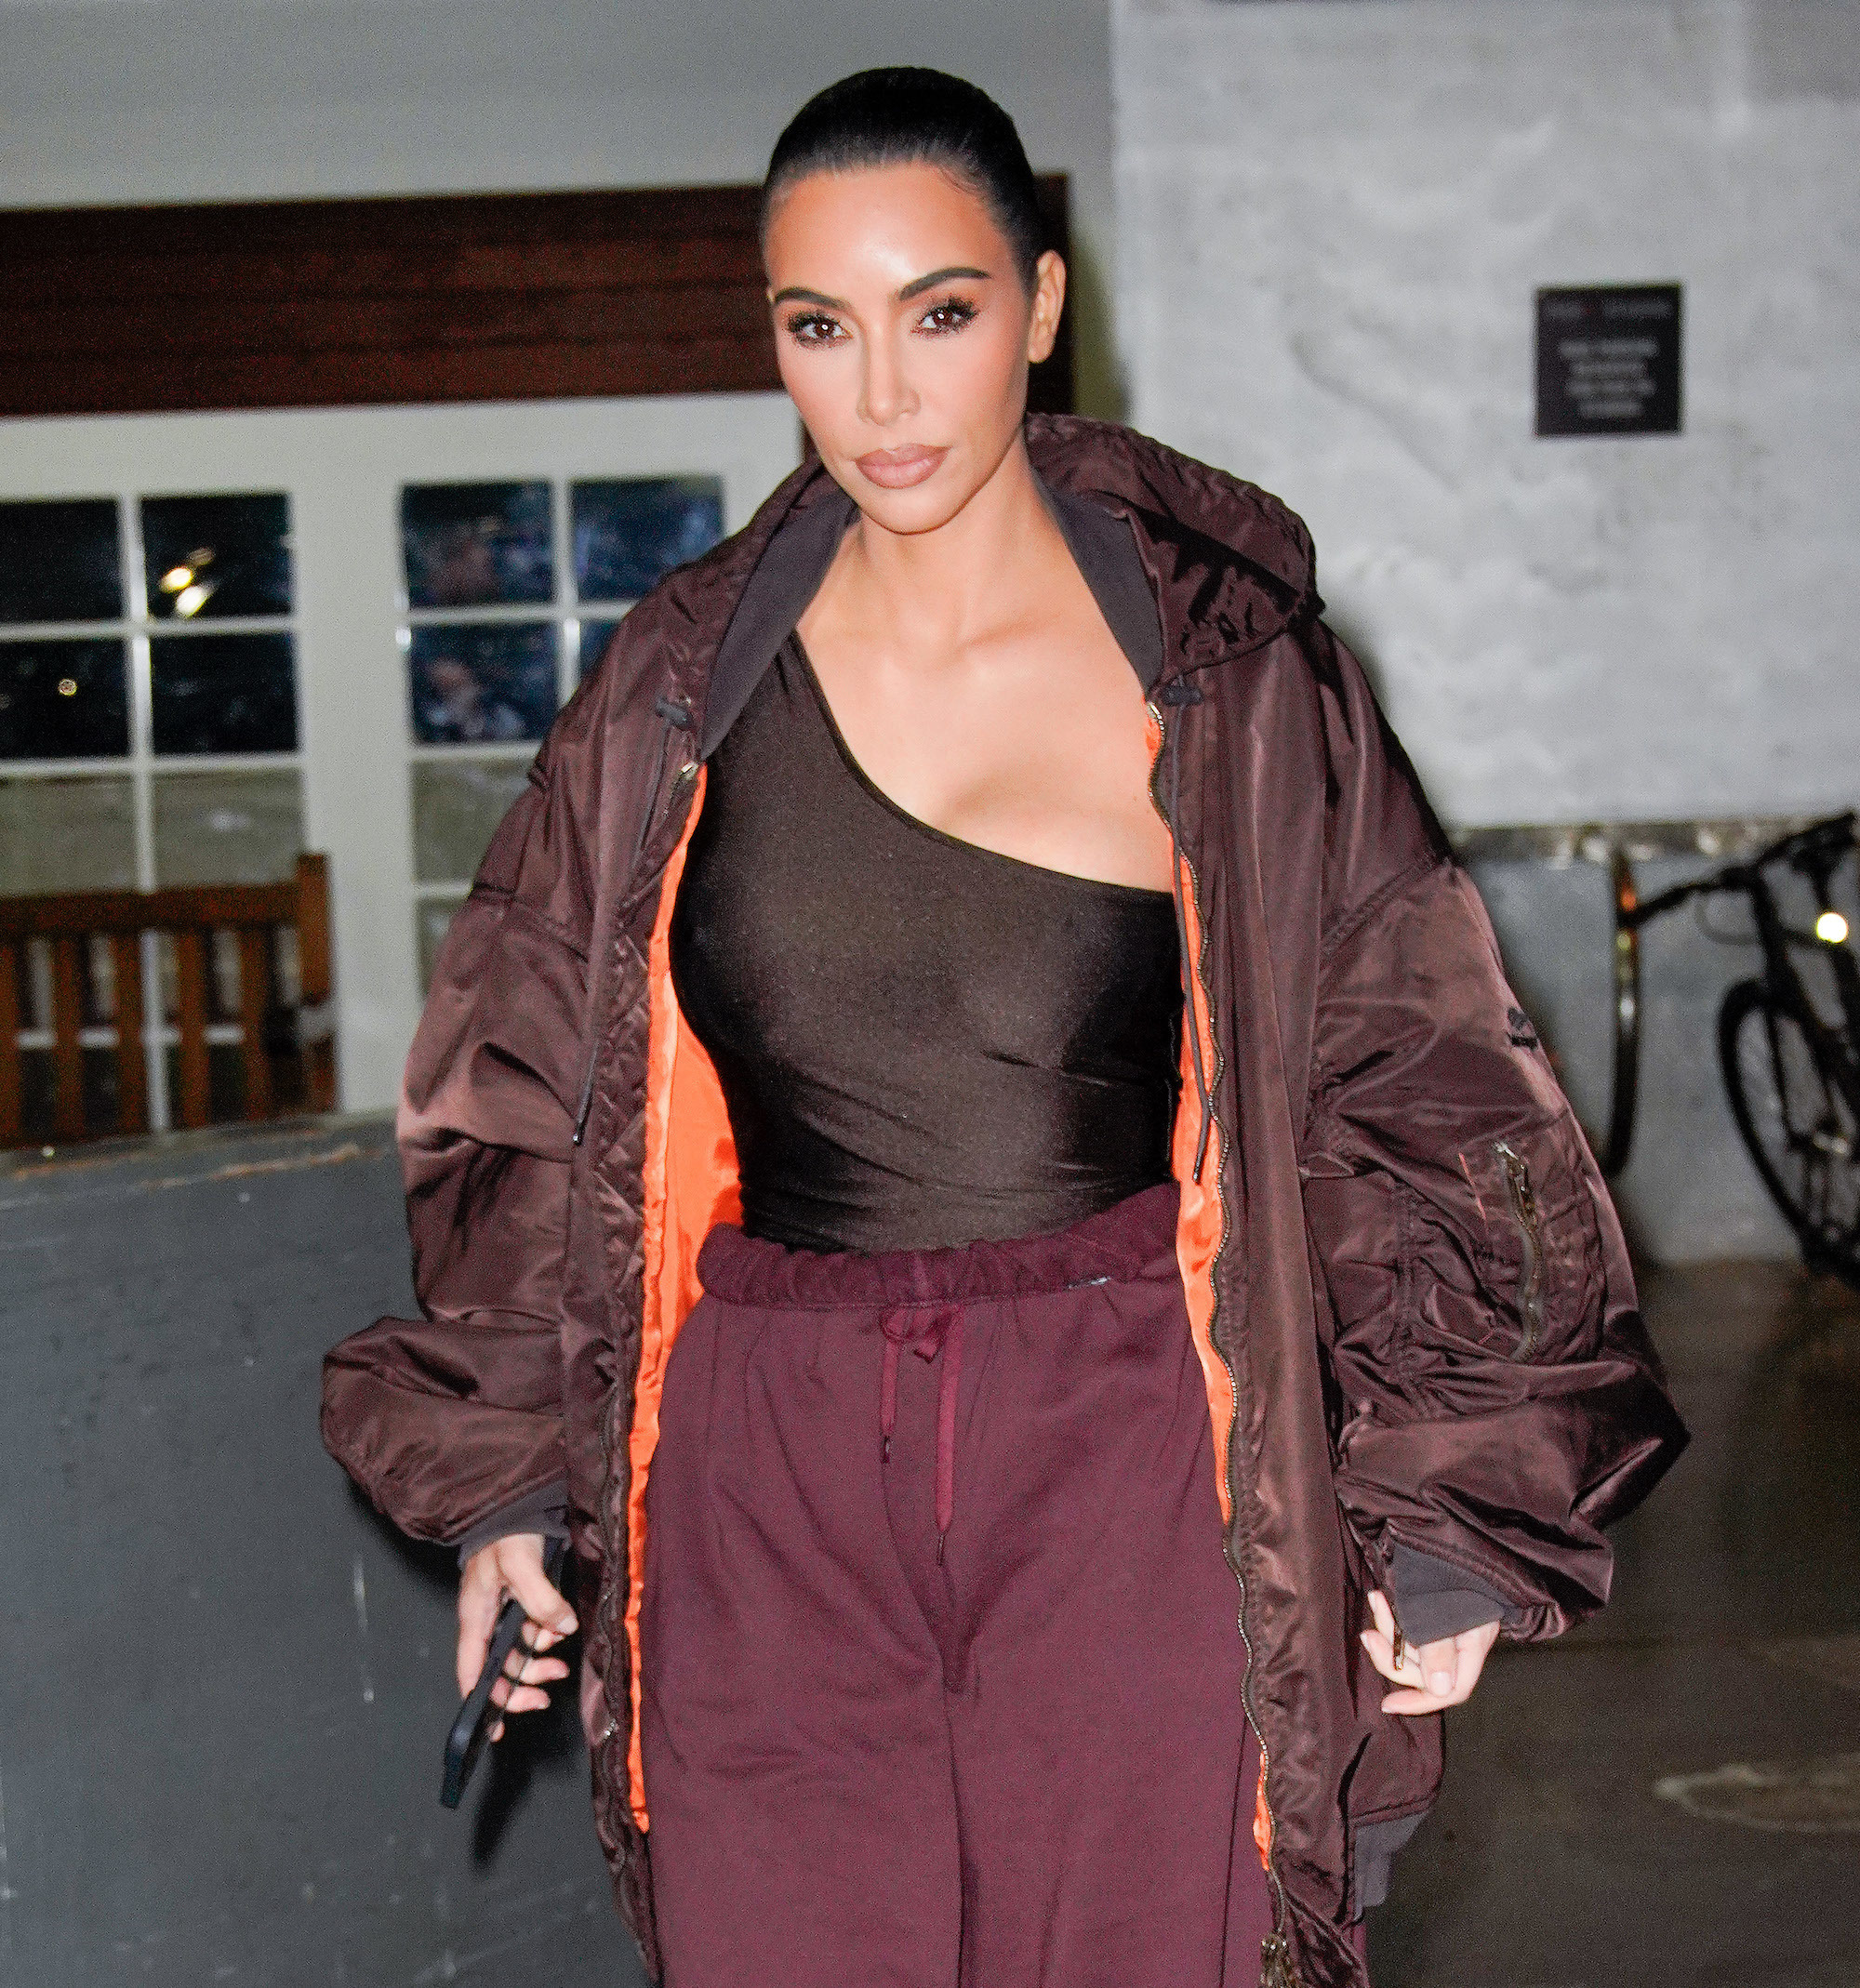 Kim Kardashian swears by this pants trend